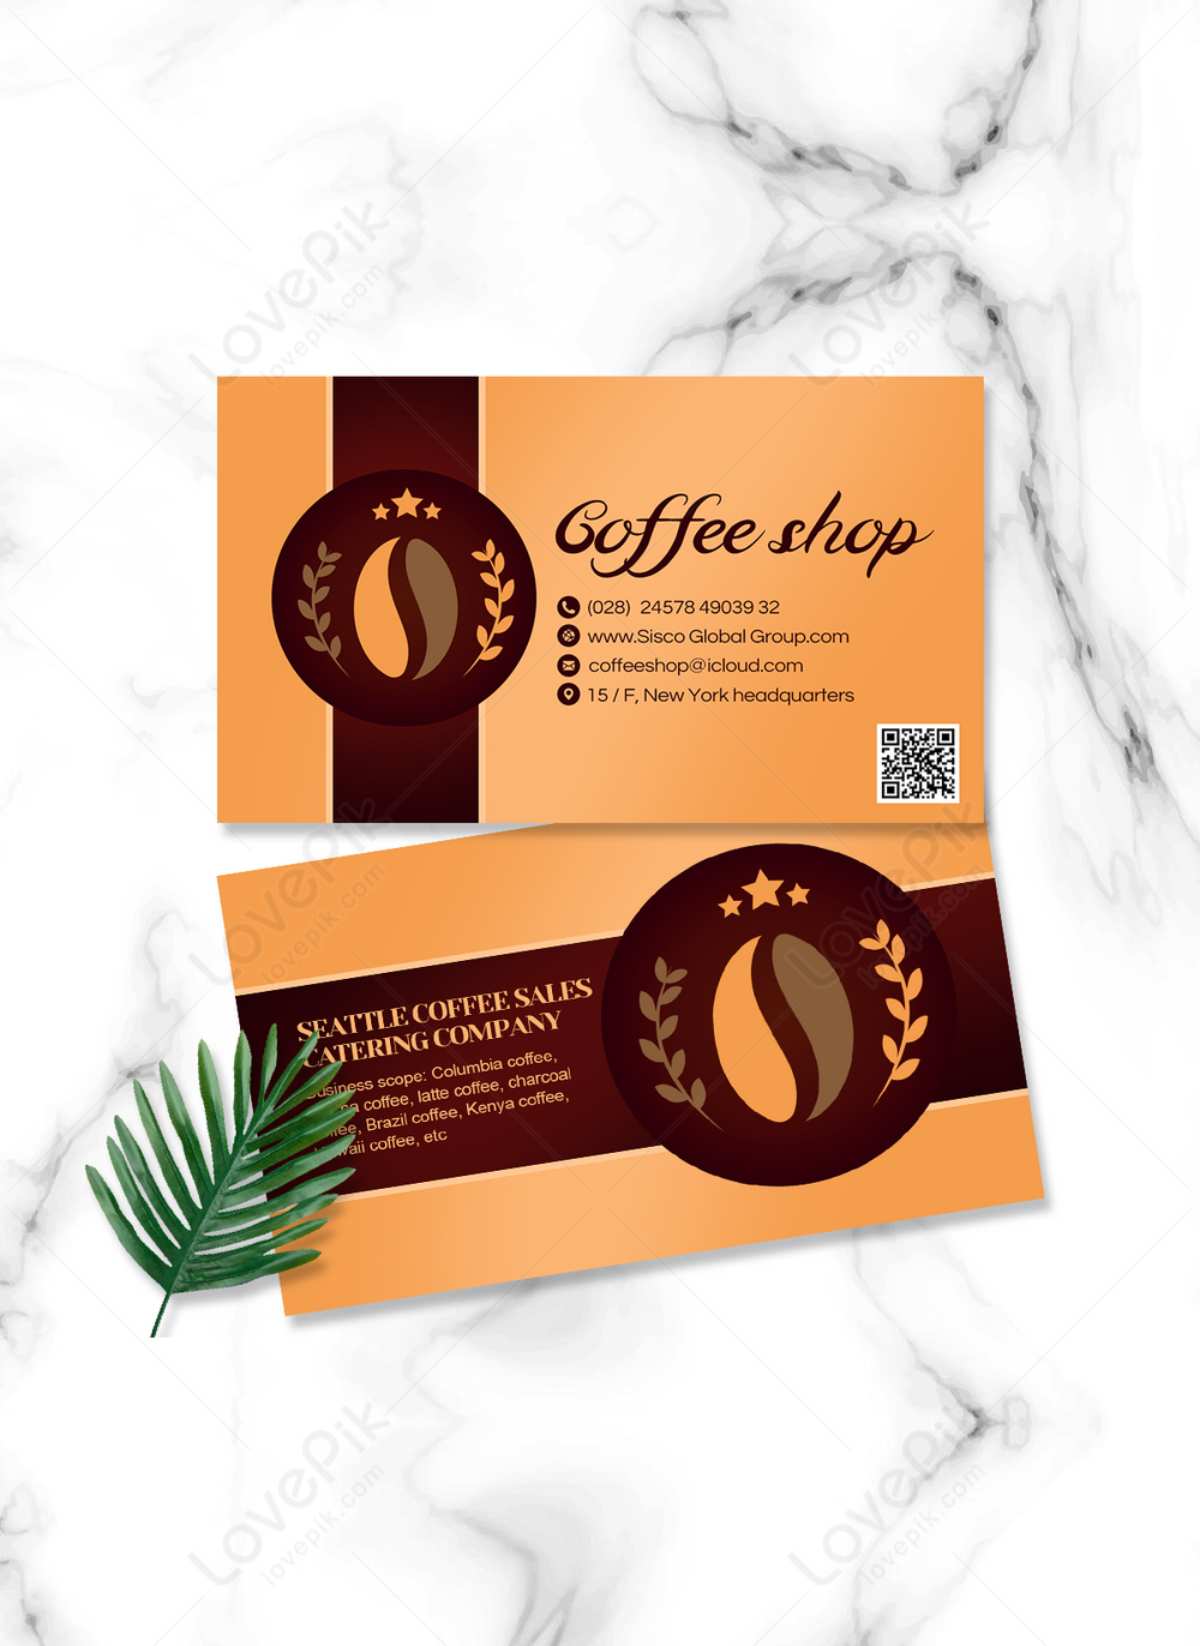 Contoh kartu nama bisnis kafe